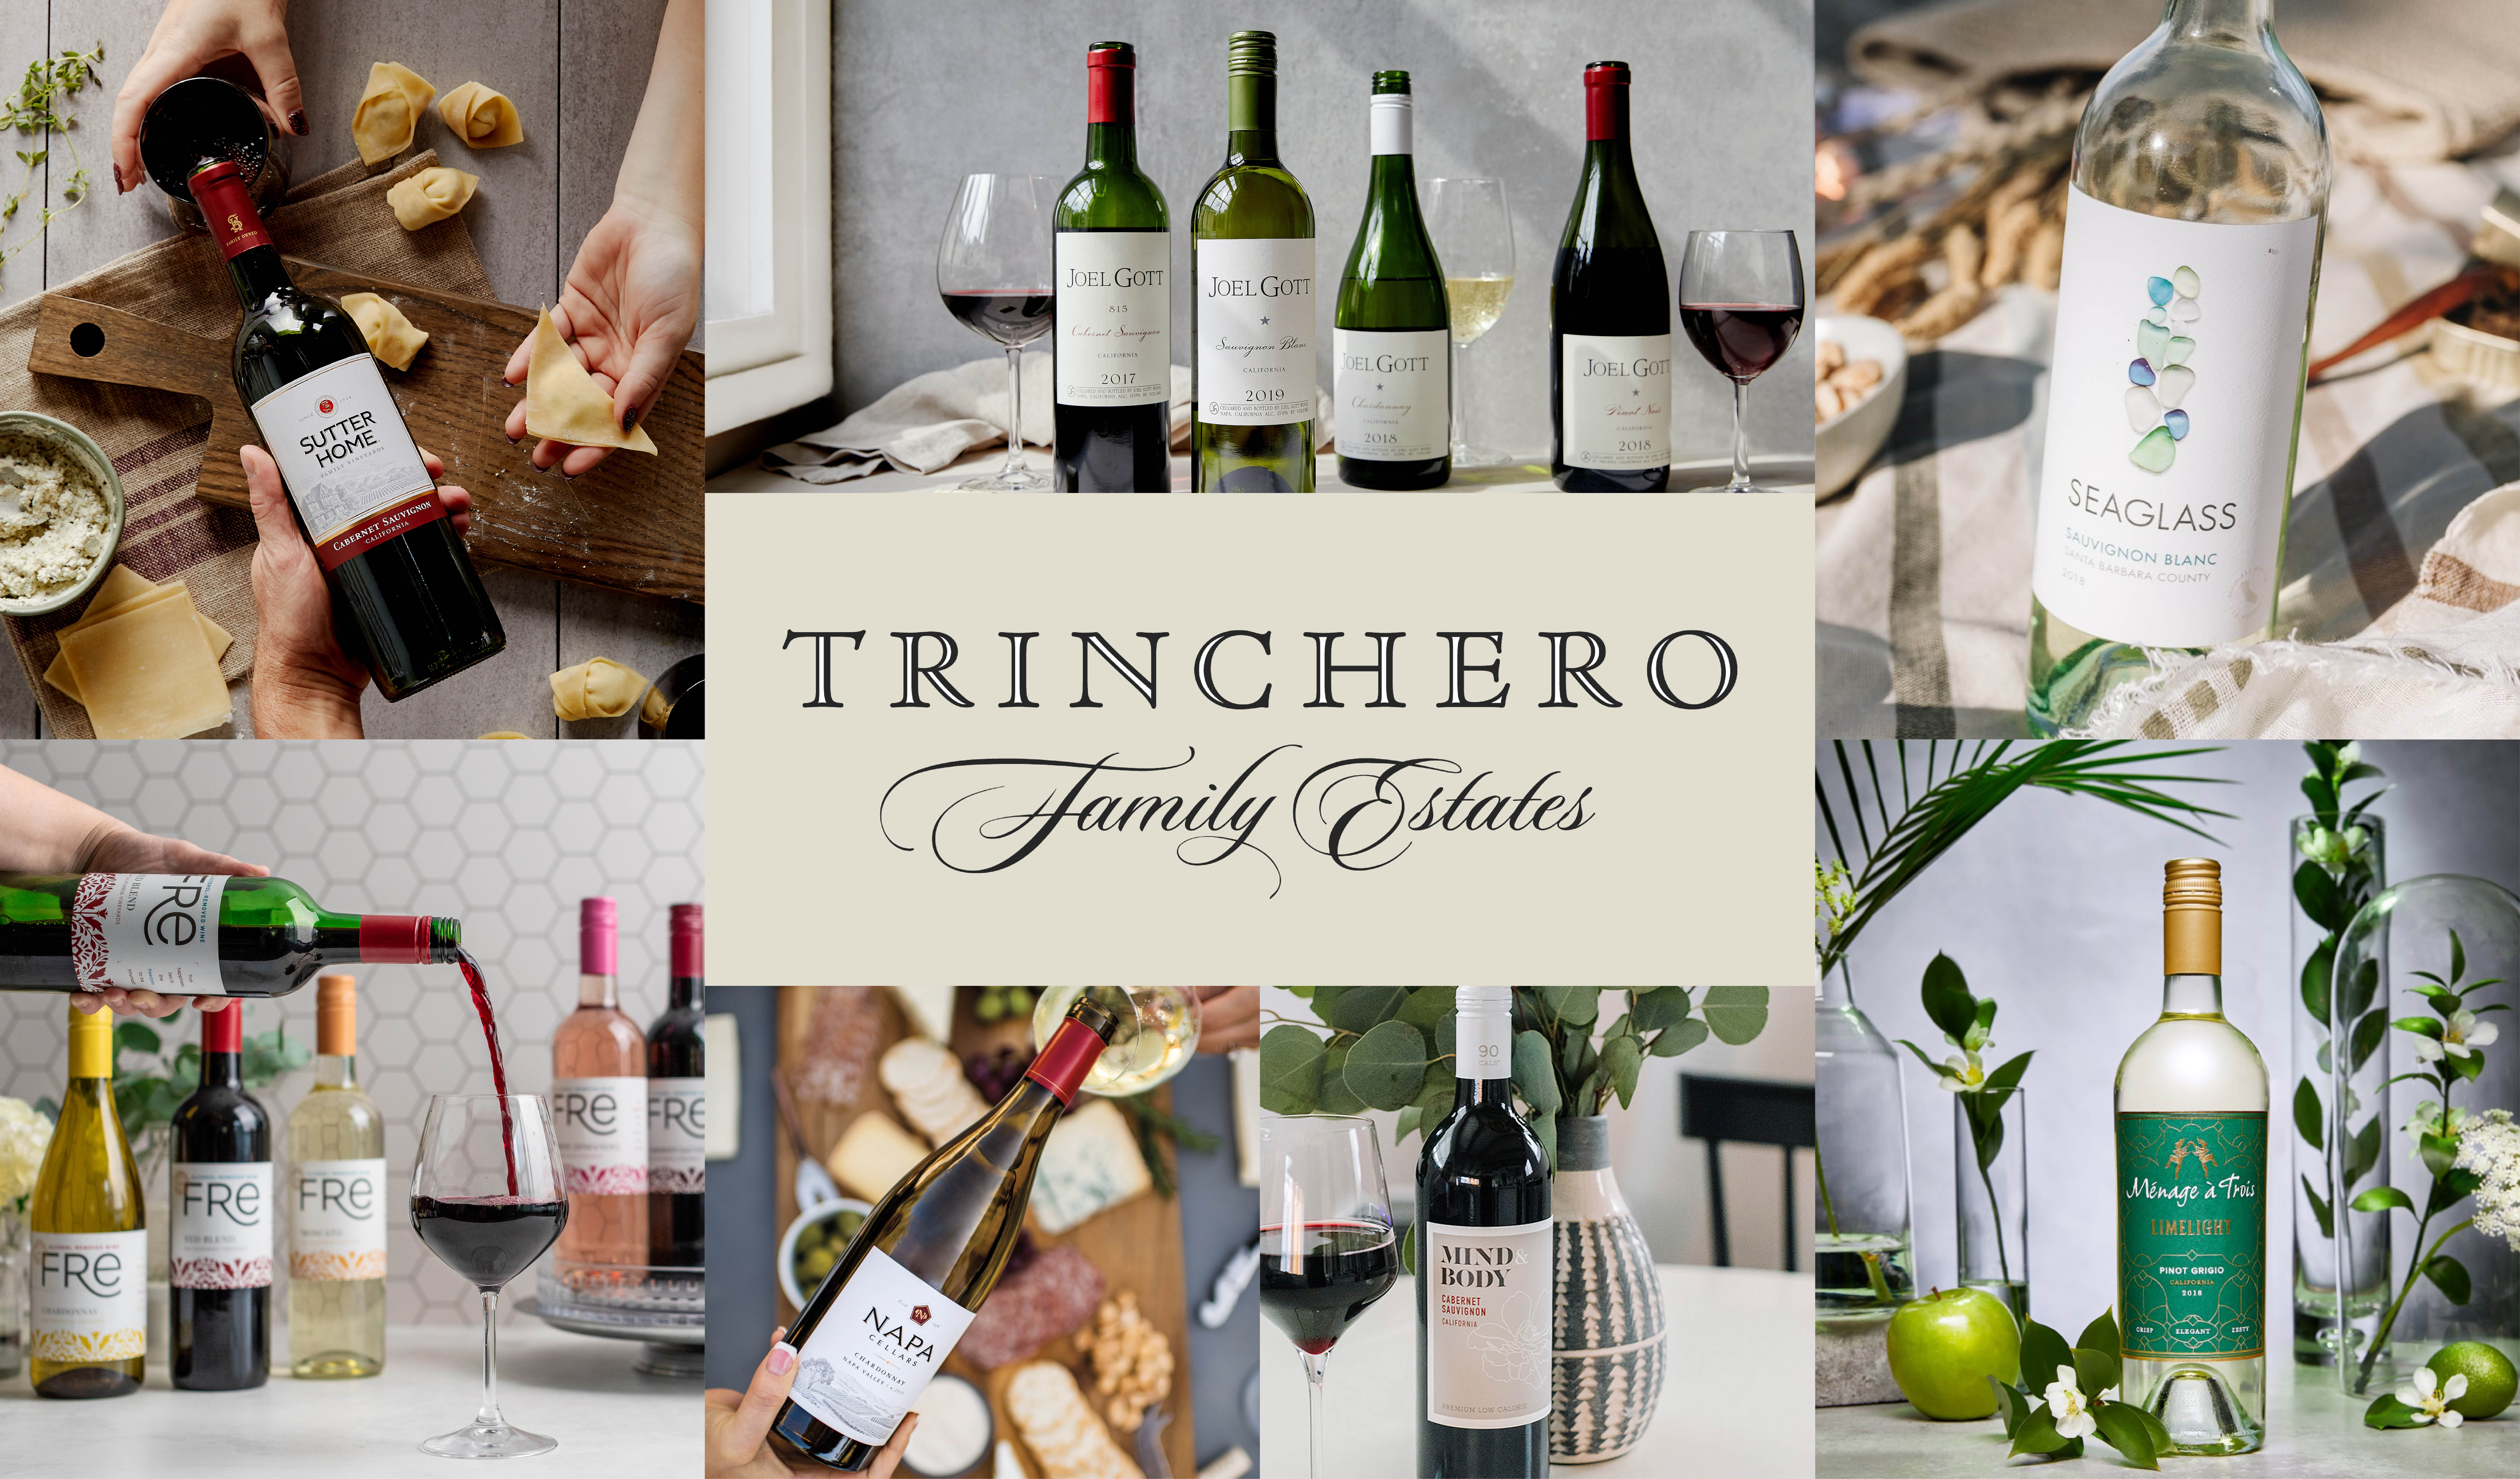 Johnson Brothers Expands Partnership with Trinchero Family Estates Wine & Spirits